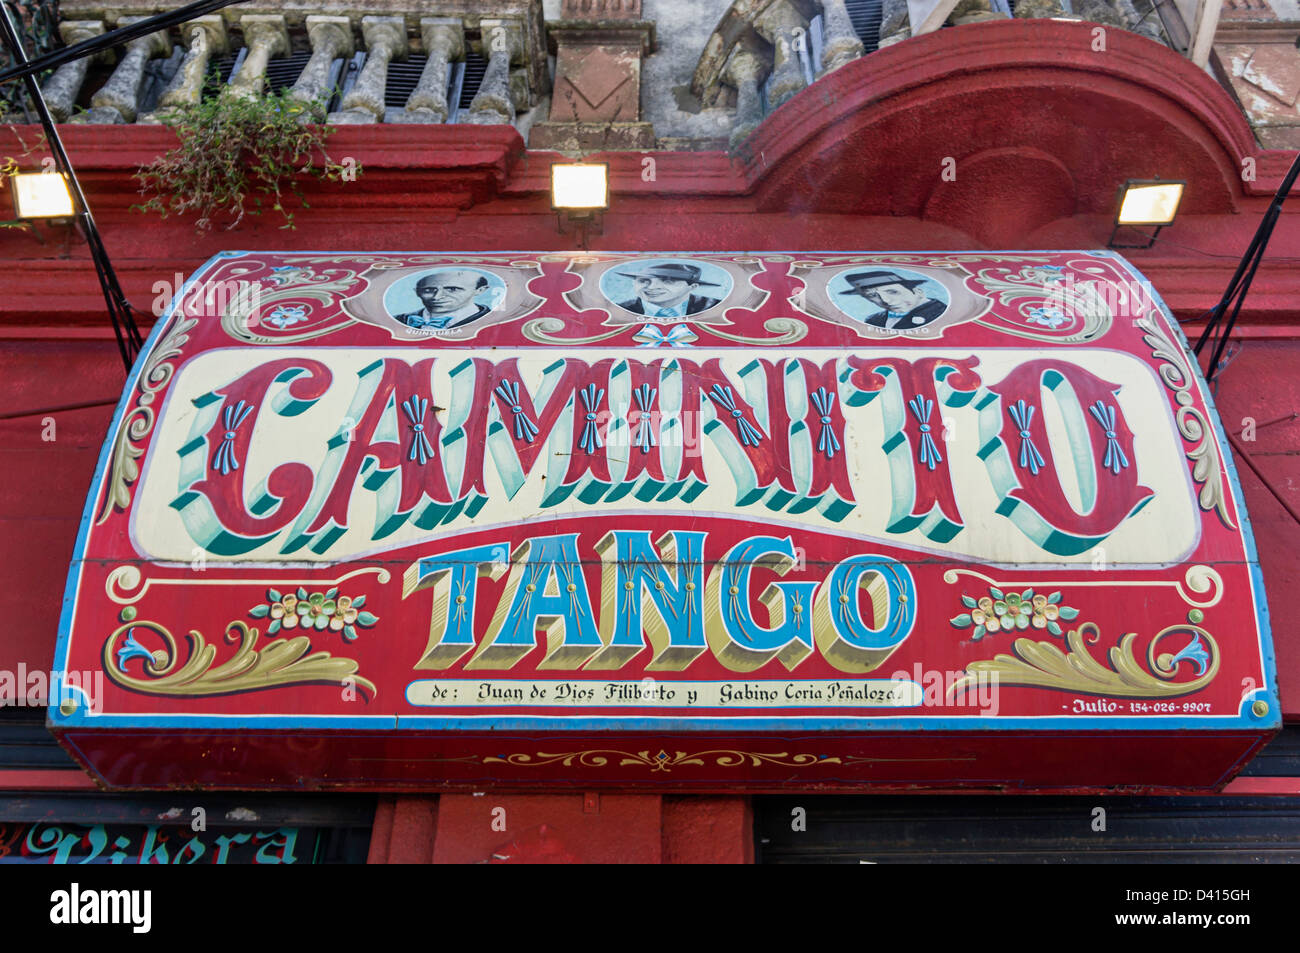 Caminito Tango Zeichen, La Boca, Buenos Aires, Argentinien Stockfoto